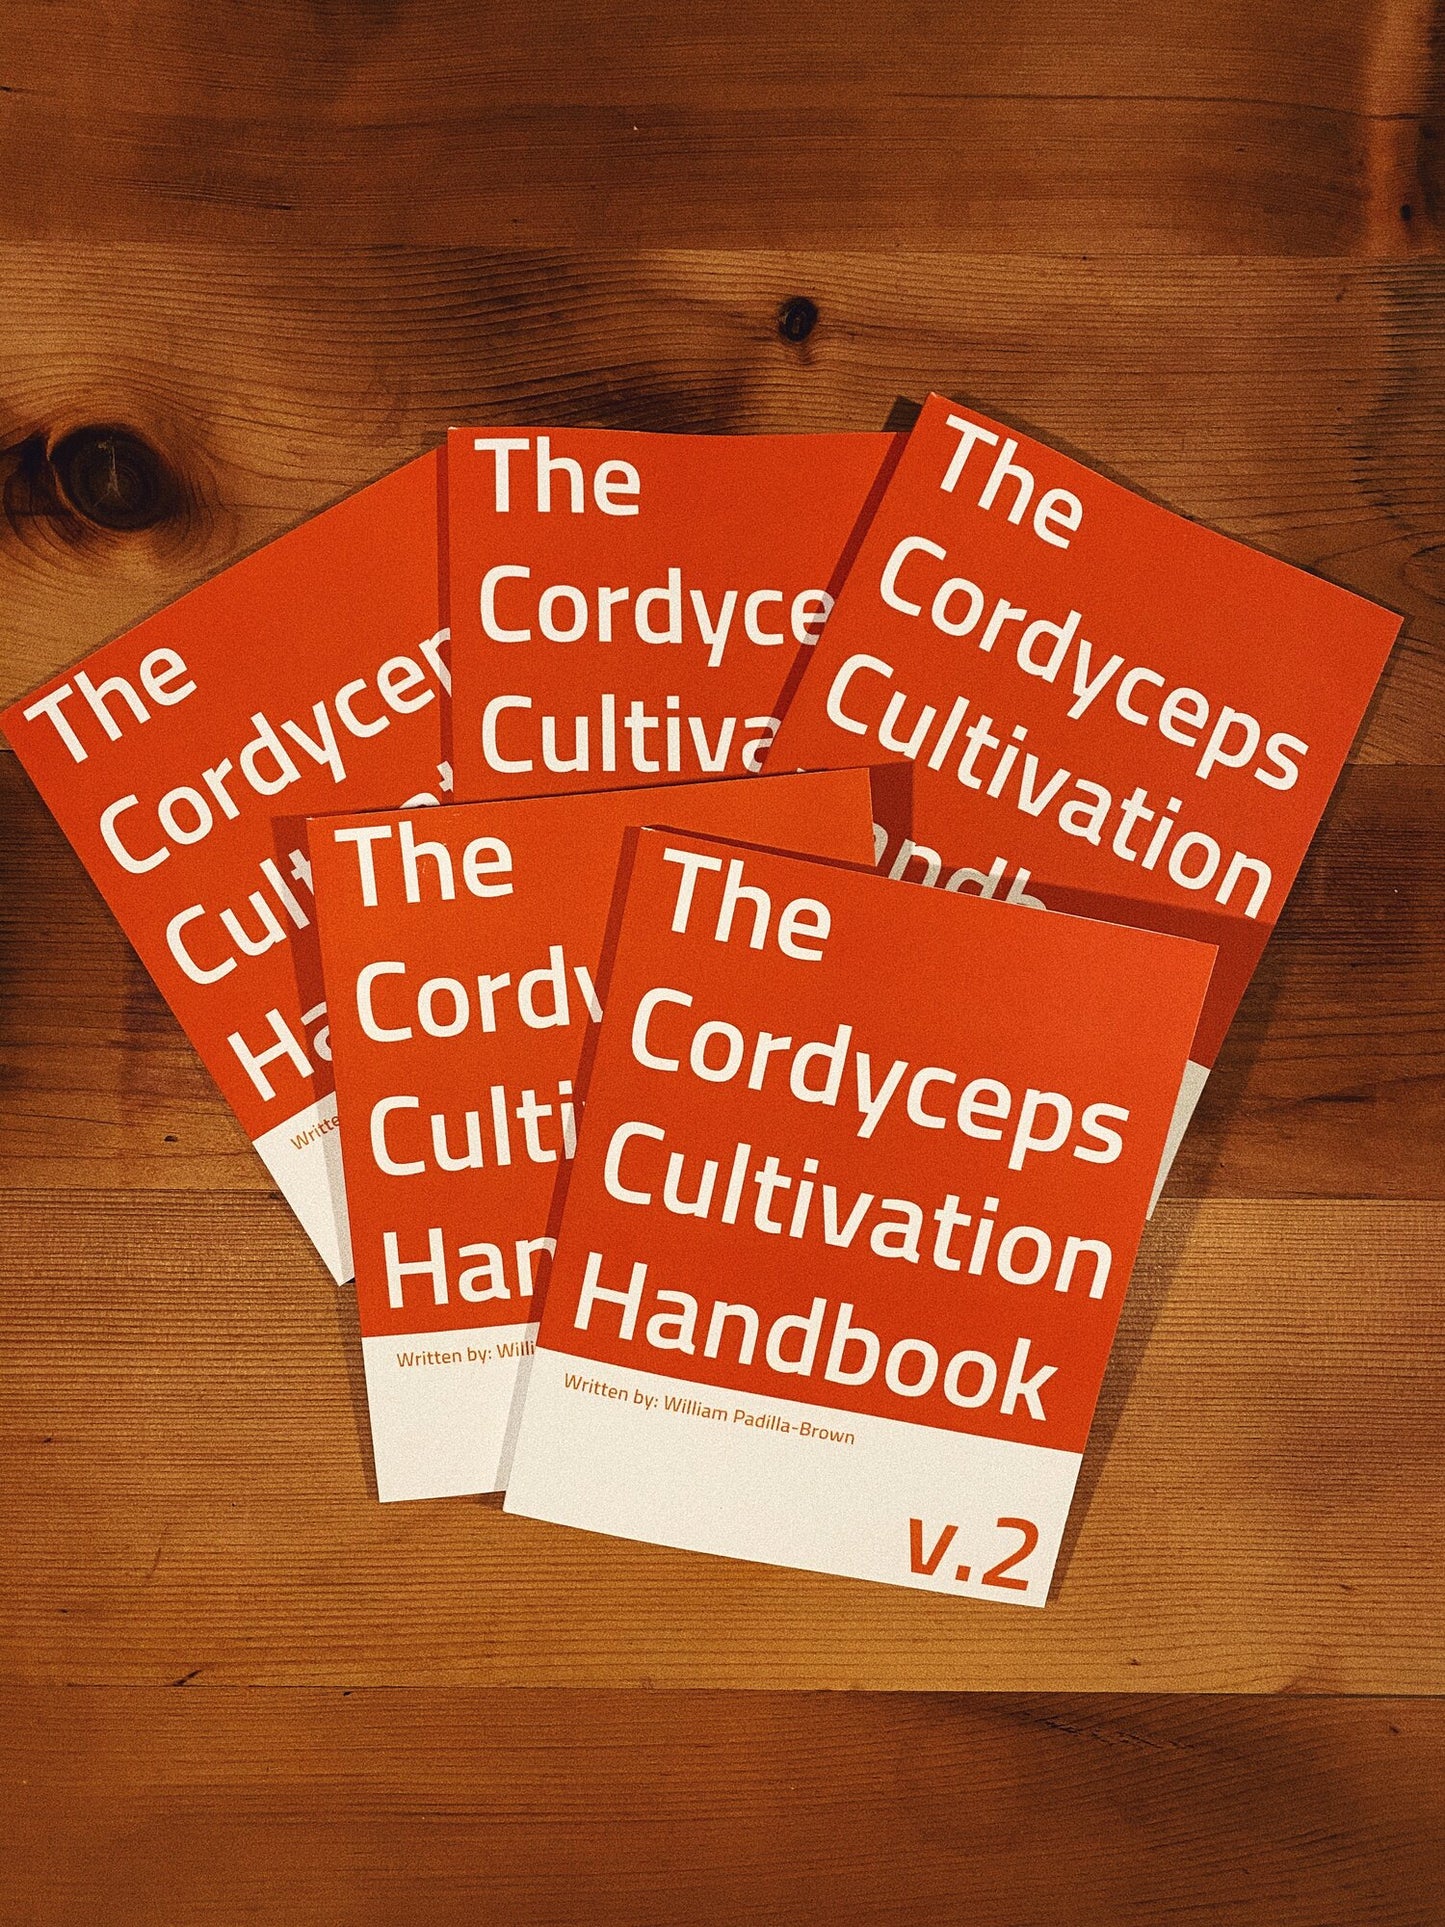 The Cordyceps Cultivation Handbook v2